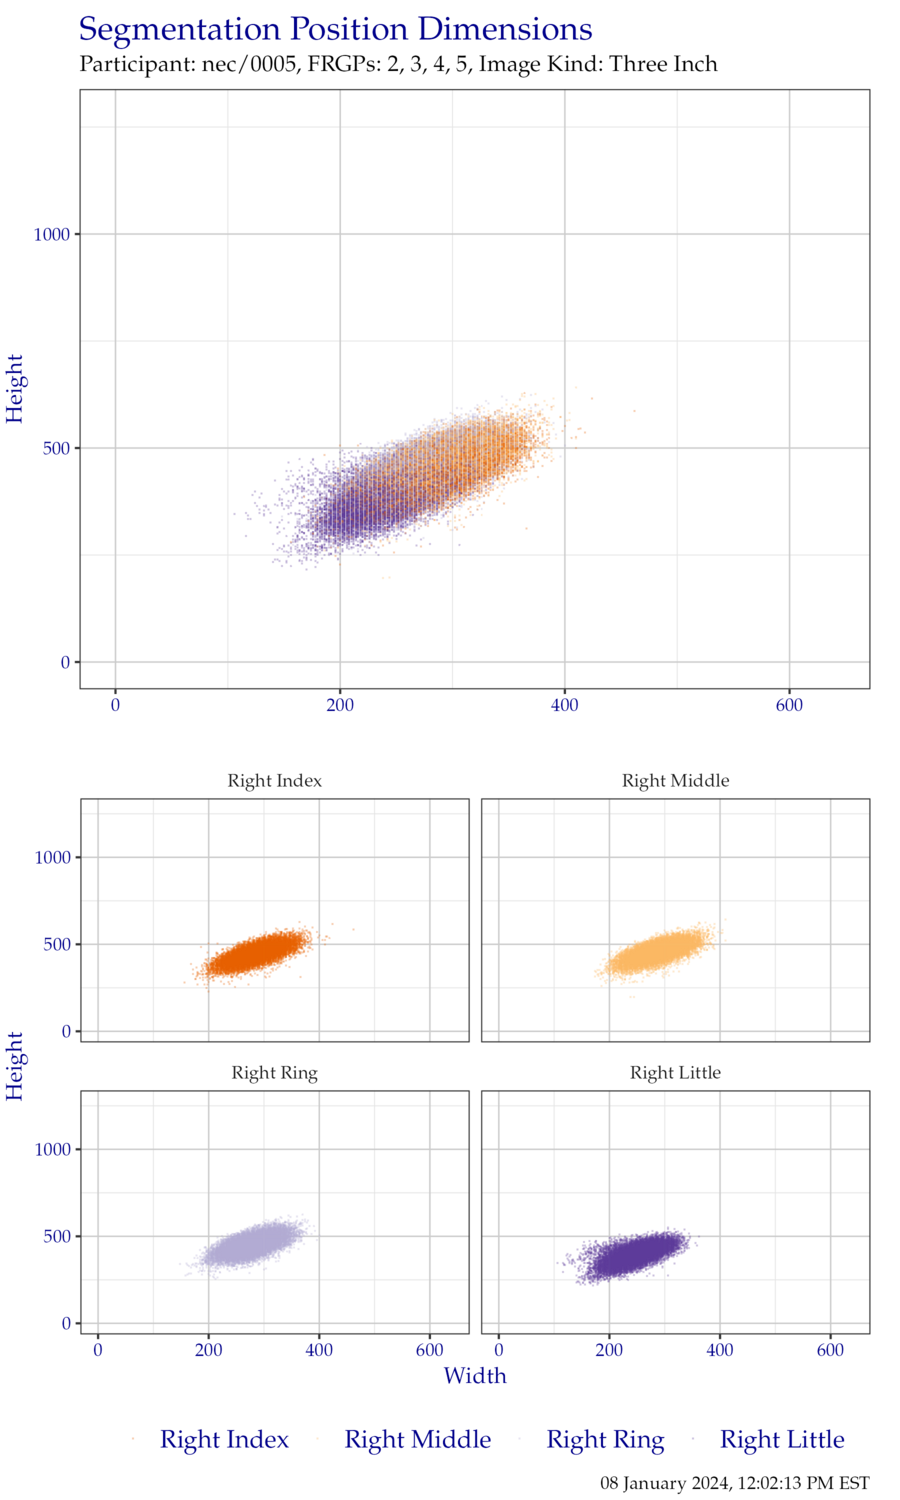 Segmentation position dimensions for right hand ThreeInch data.